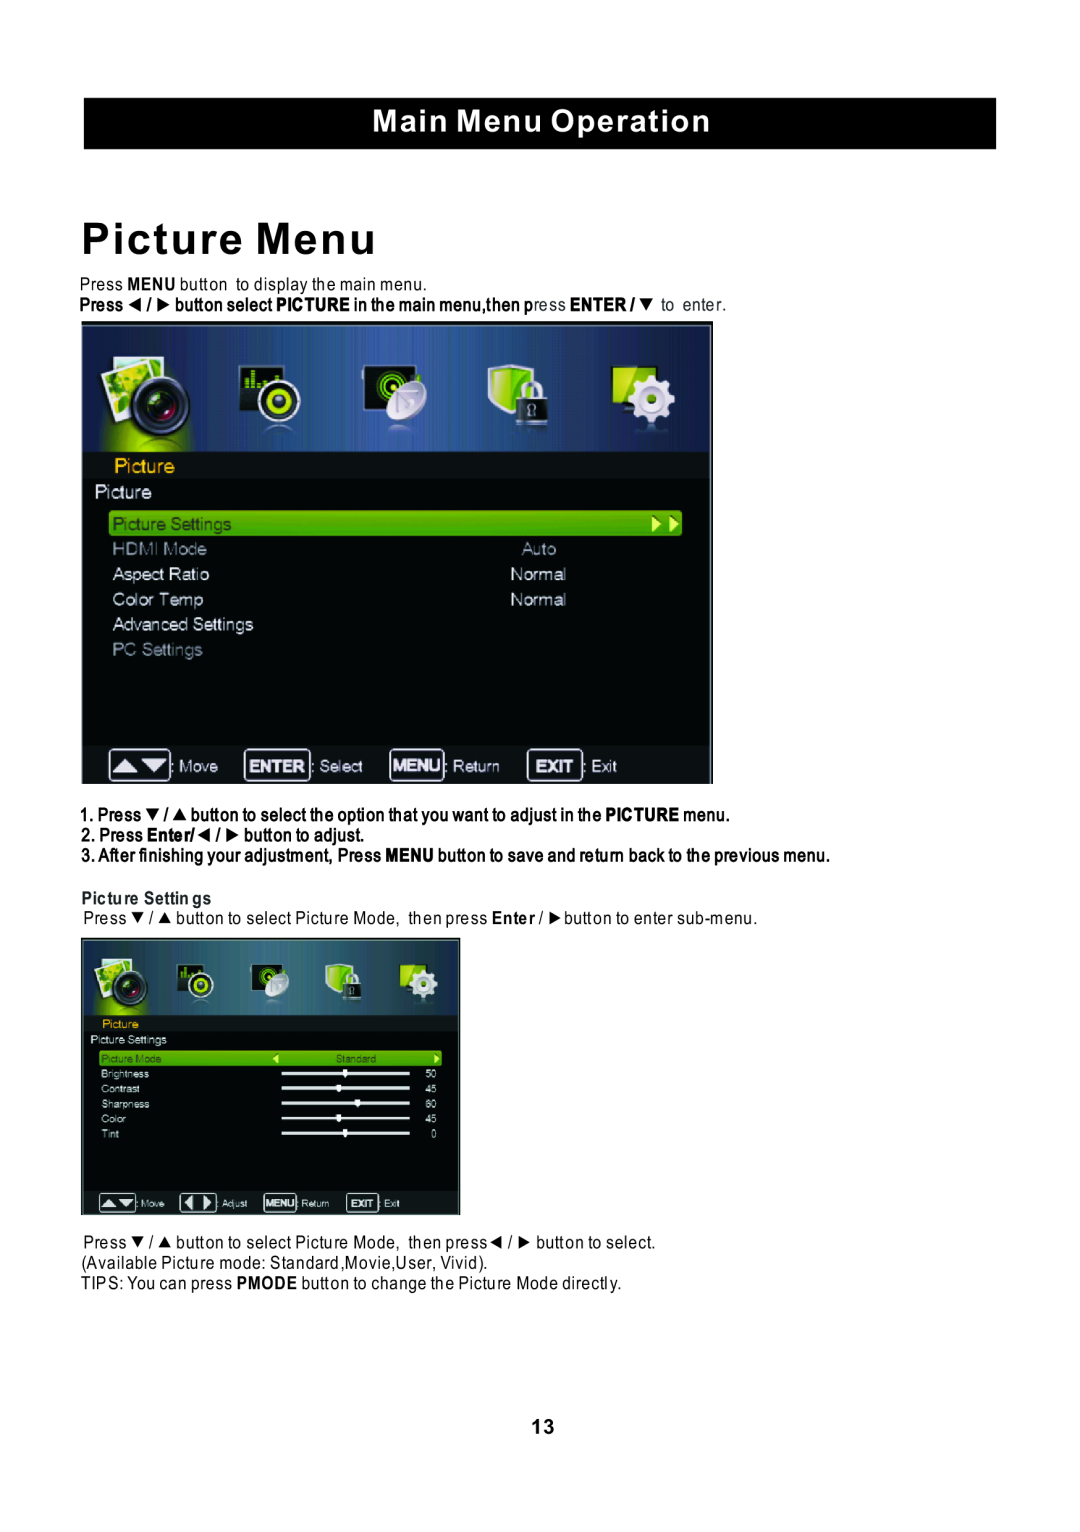 ProScan RLED2445A-B instruction manual Picture Menu, Main Menu Operation 